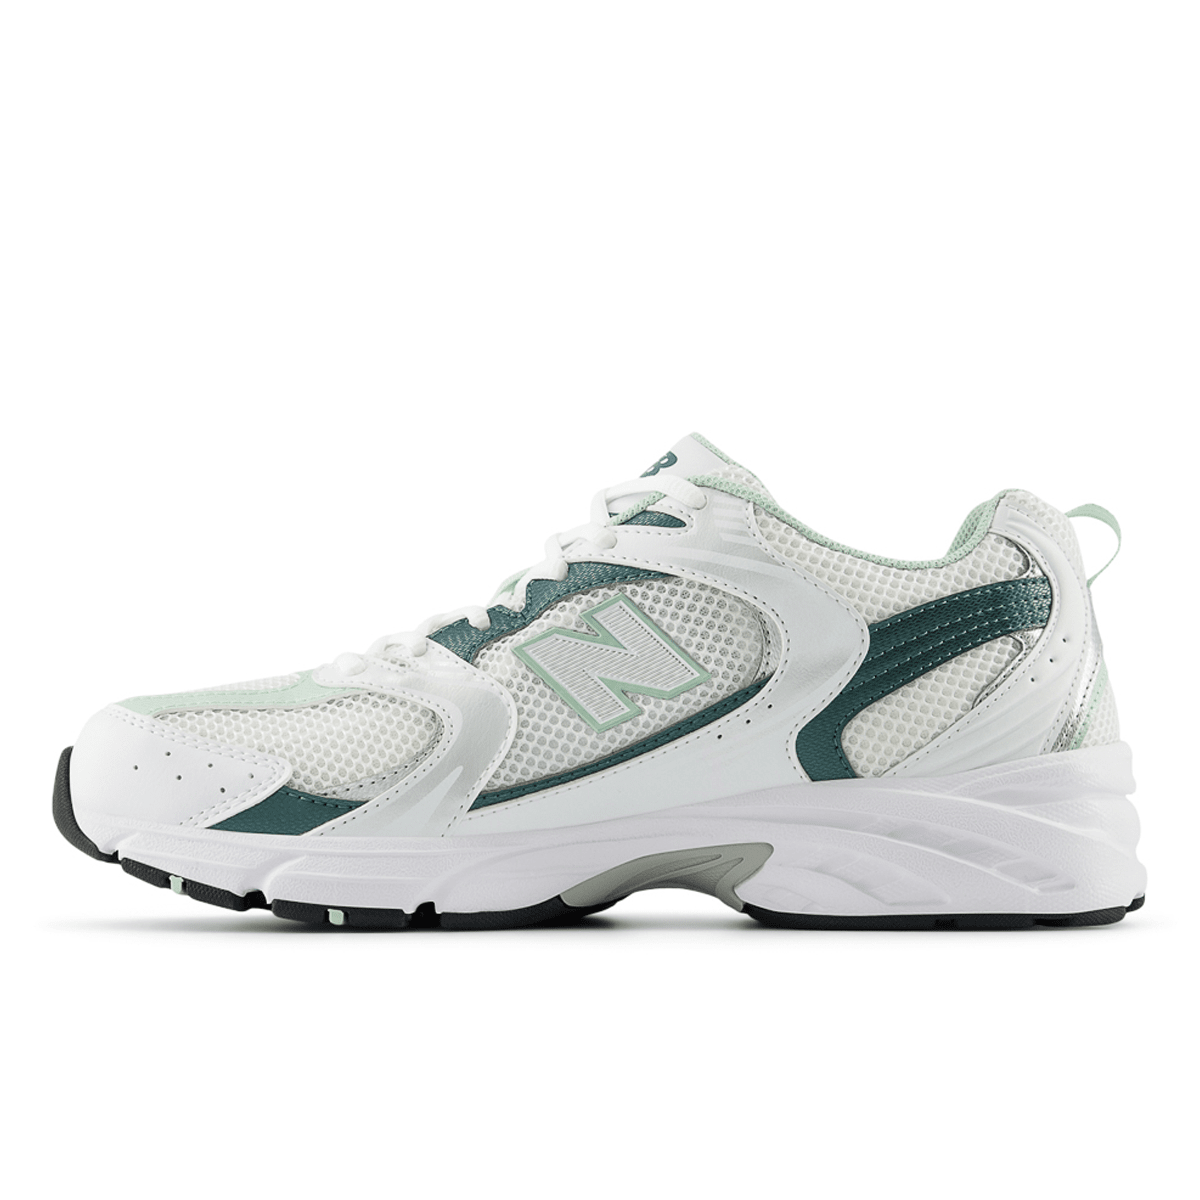 New Balance 530 Verde "White Mint" Blizz Sneakers 